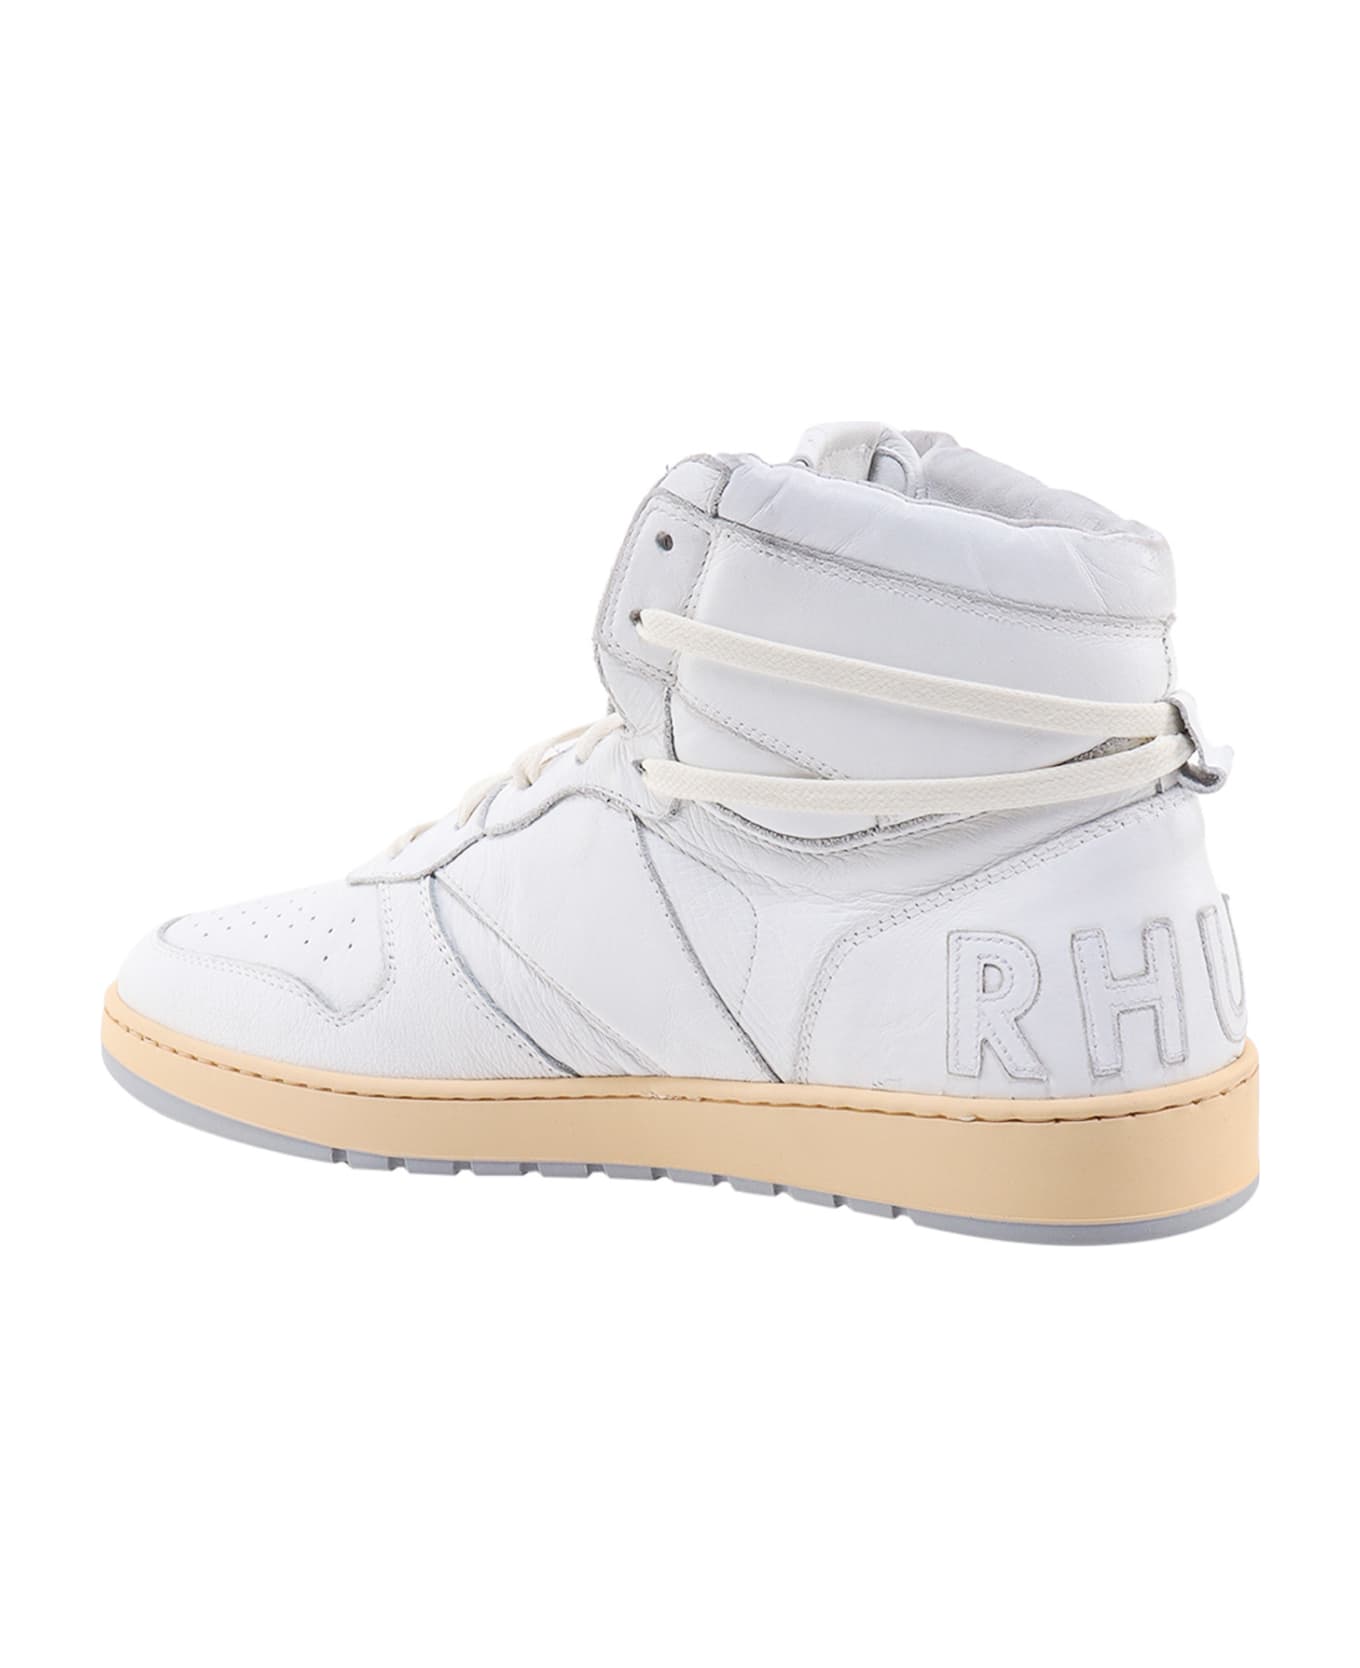 Rhude Rhecess Hi Sneakers - White